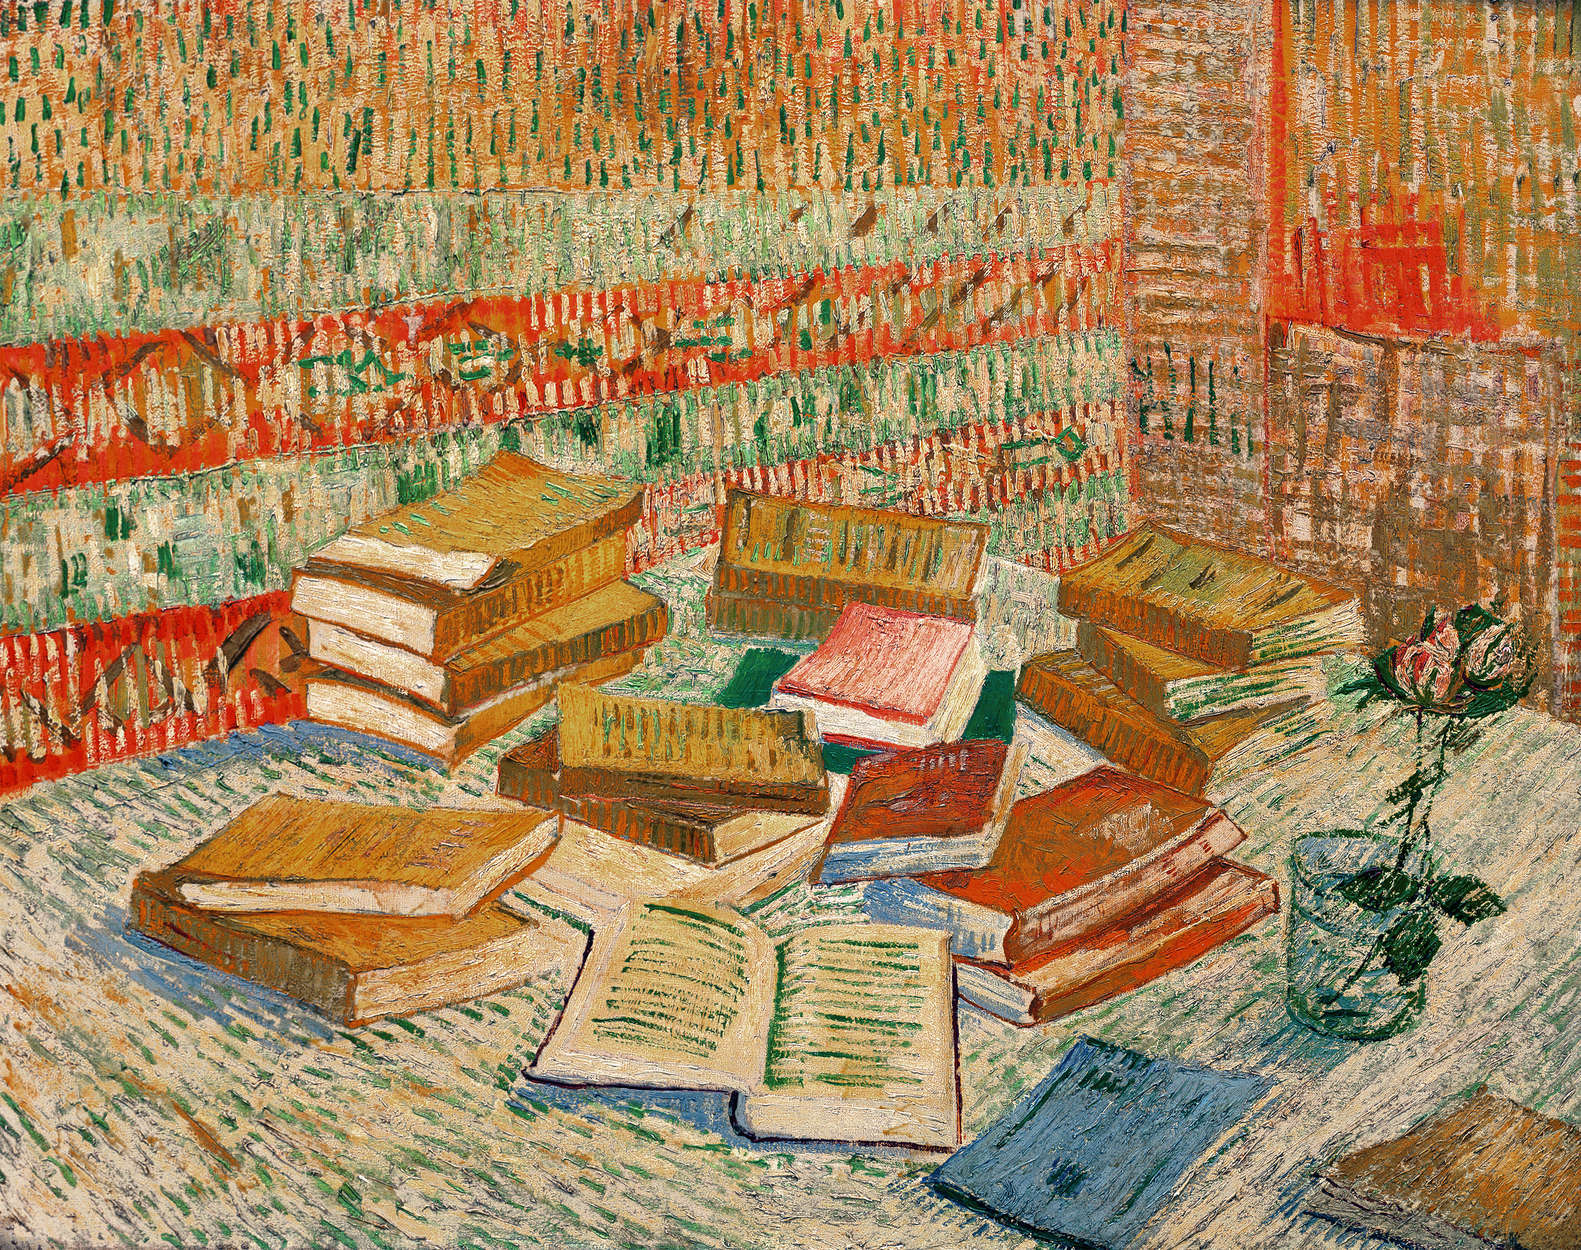             Il murale "I libri gialli" di Vincent van Gogh
        